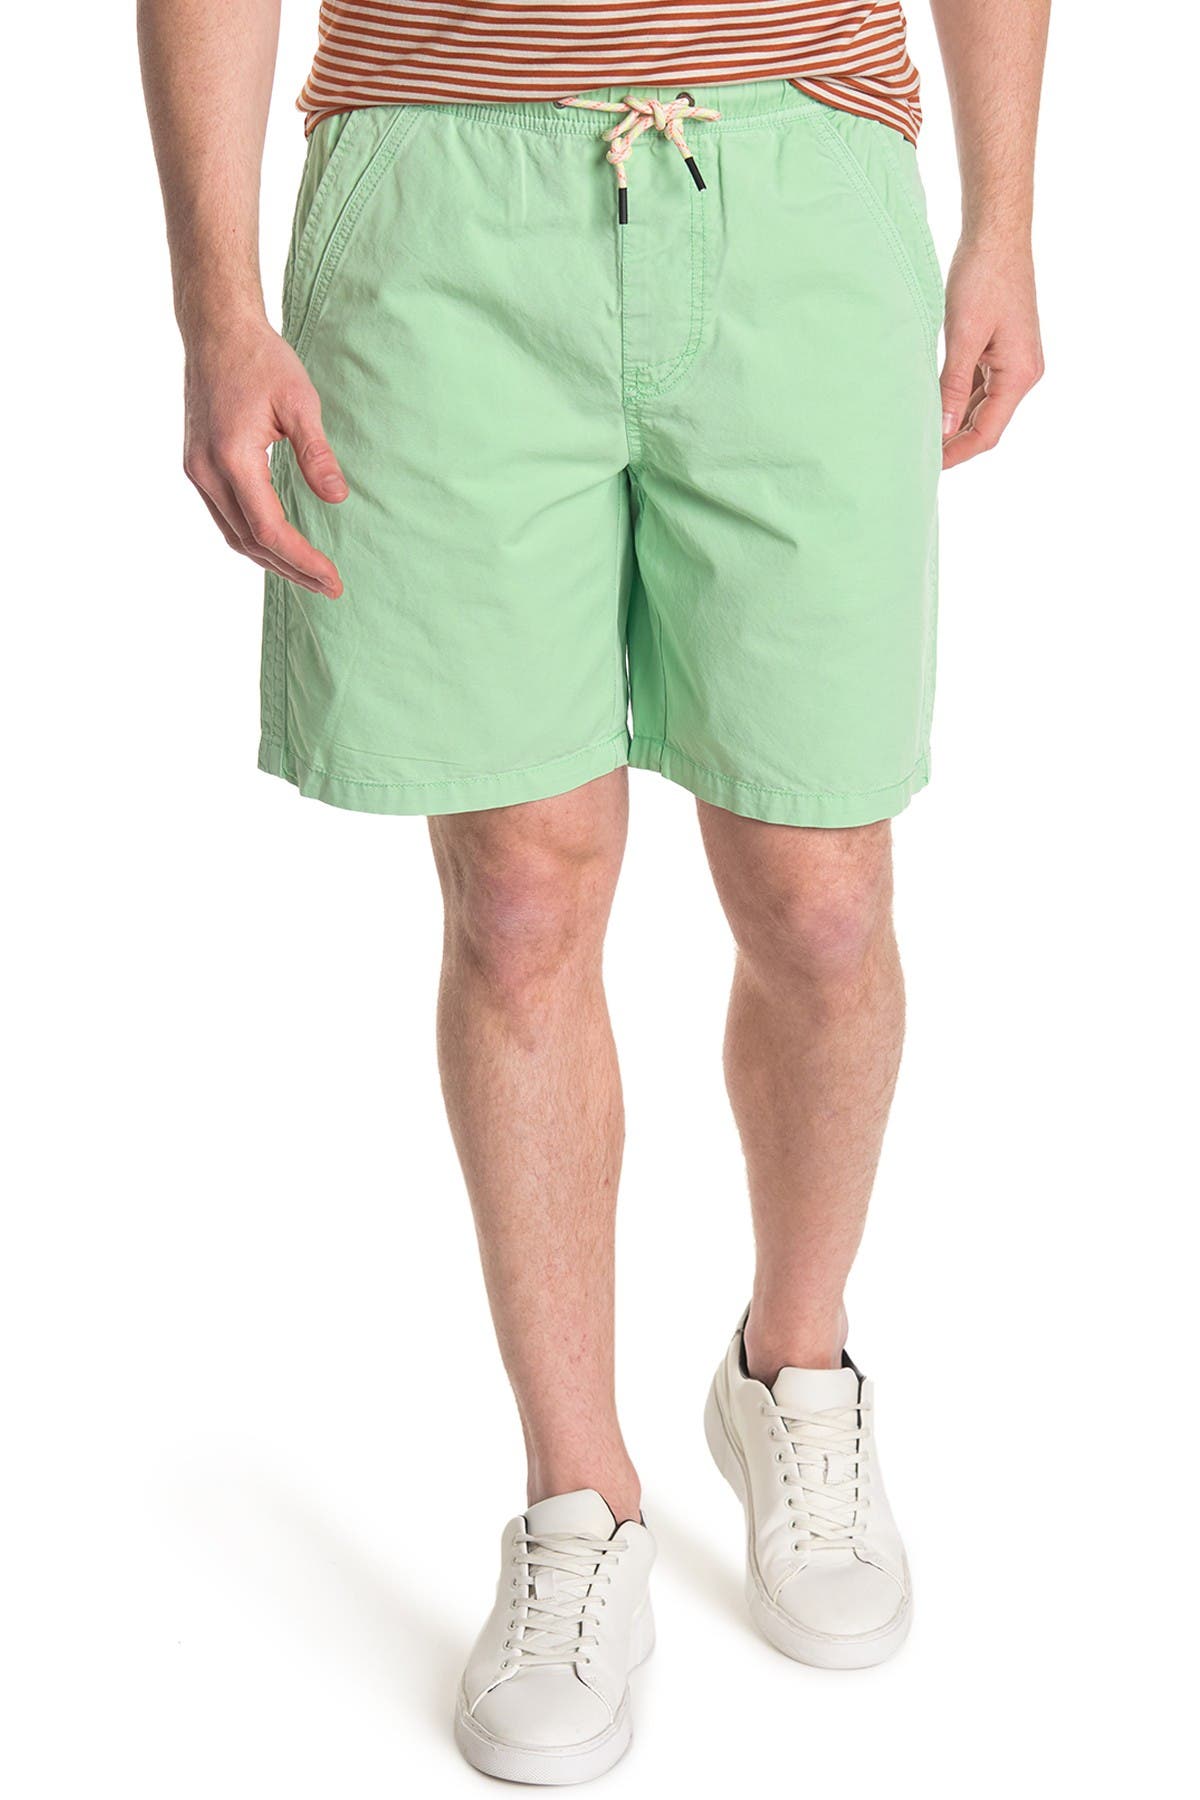 Union Denim Sun-sational Pull-on Woven Shorts In Hazy